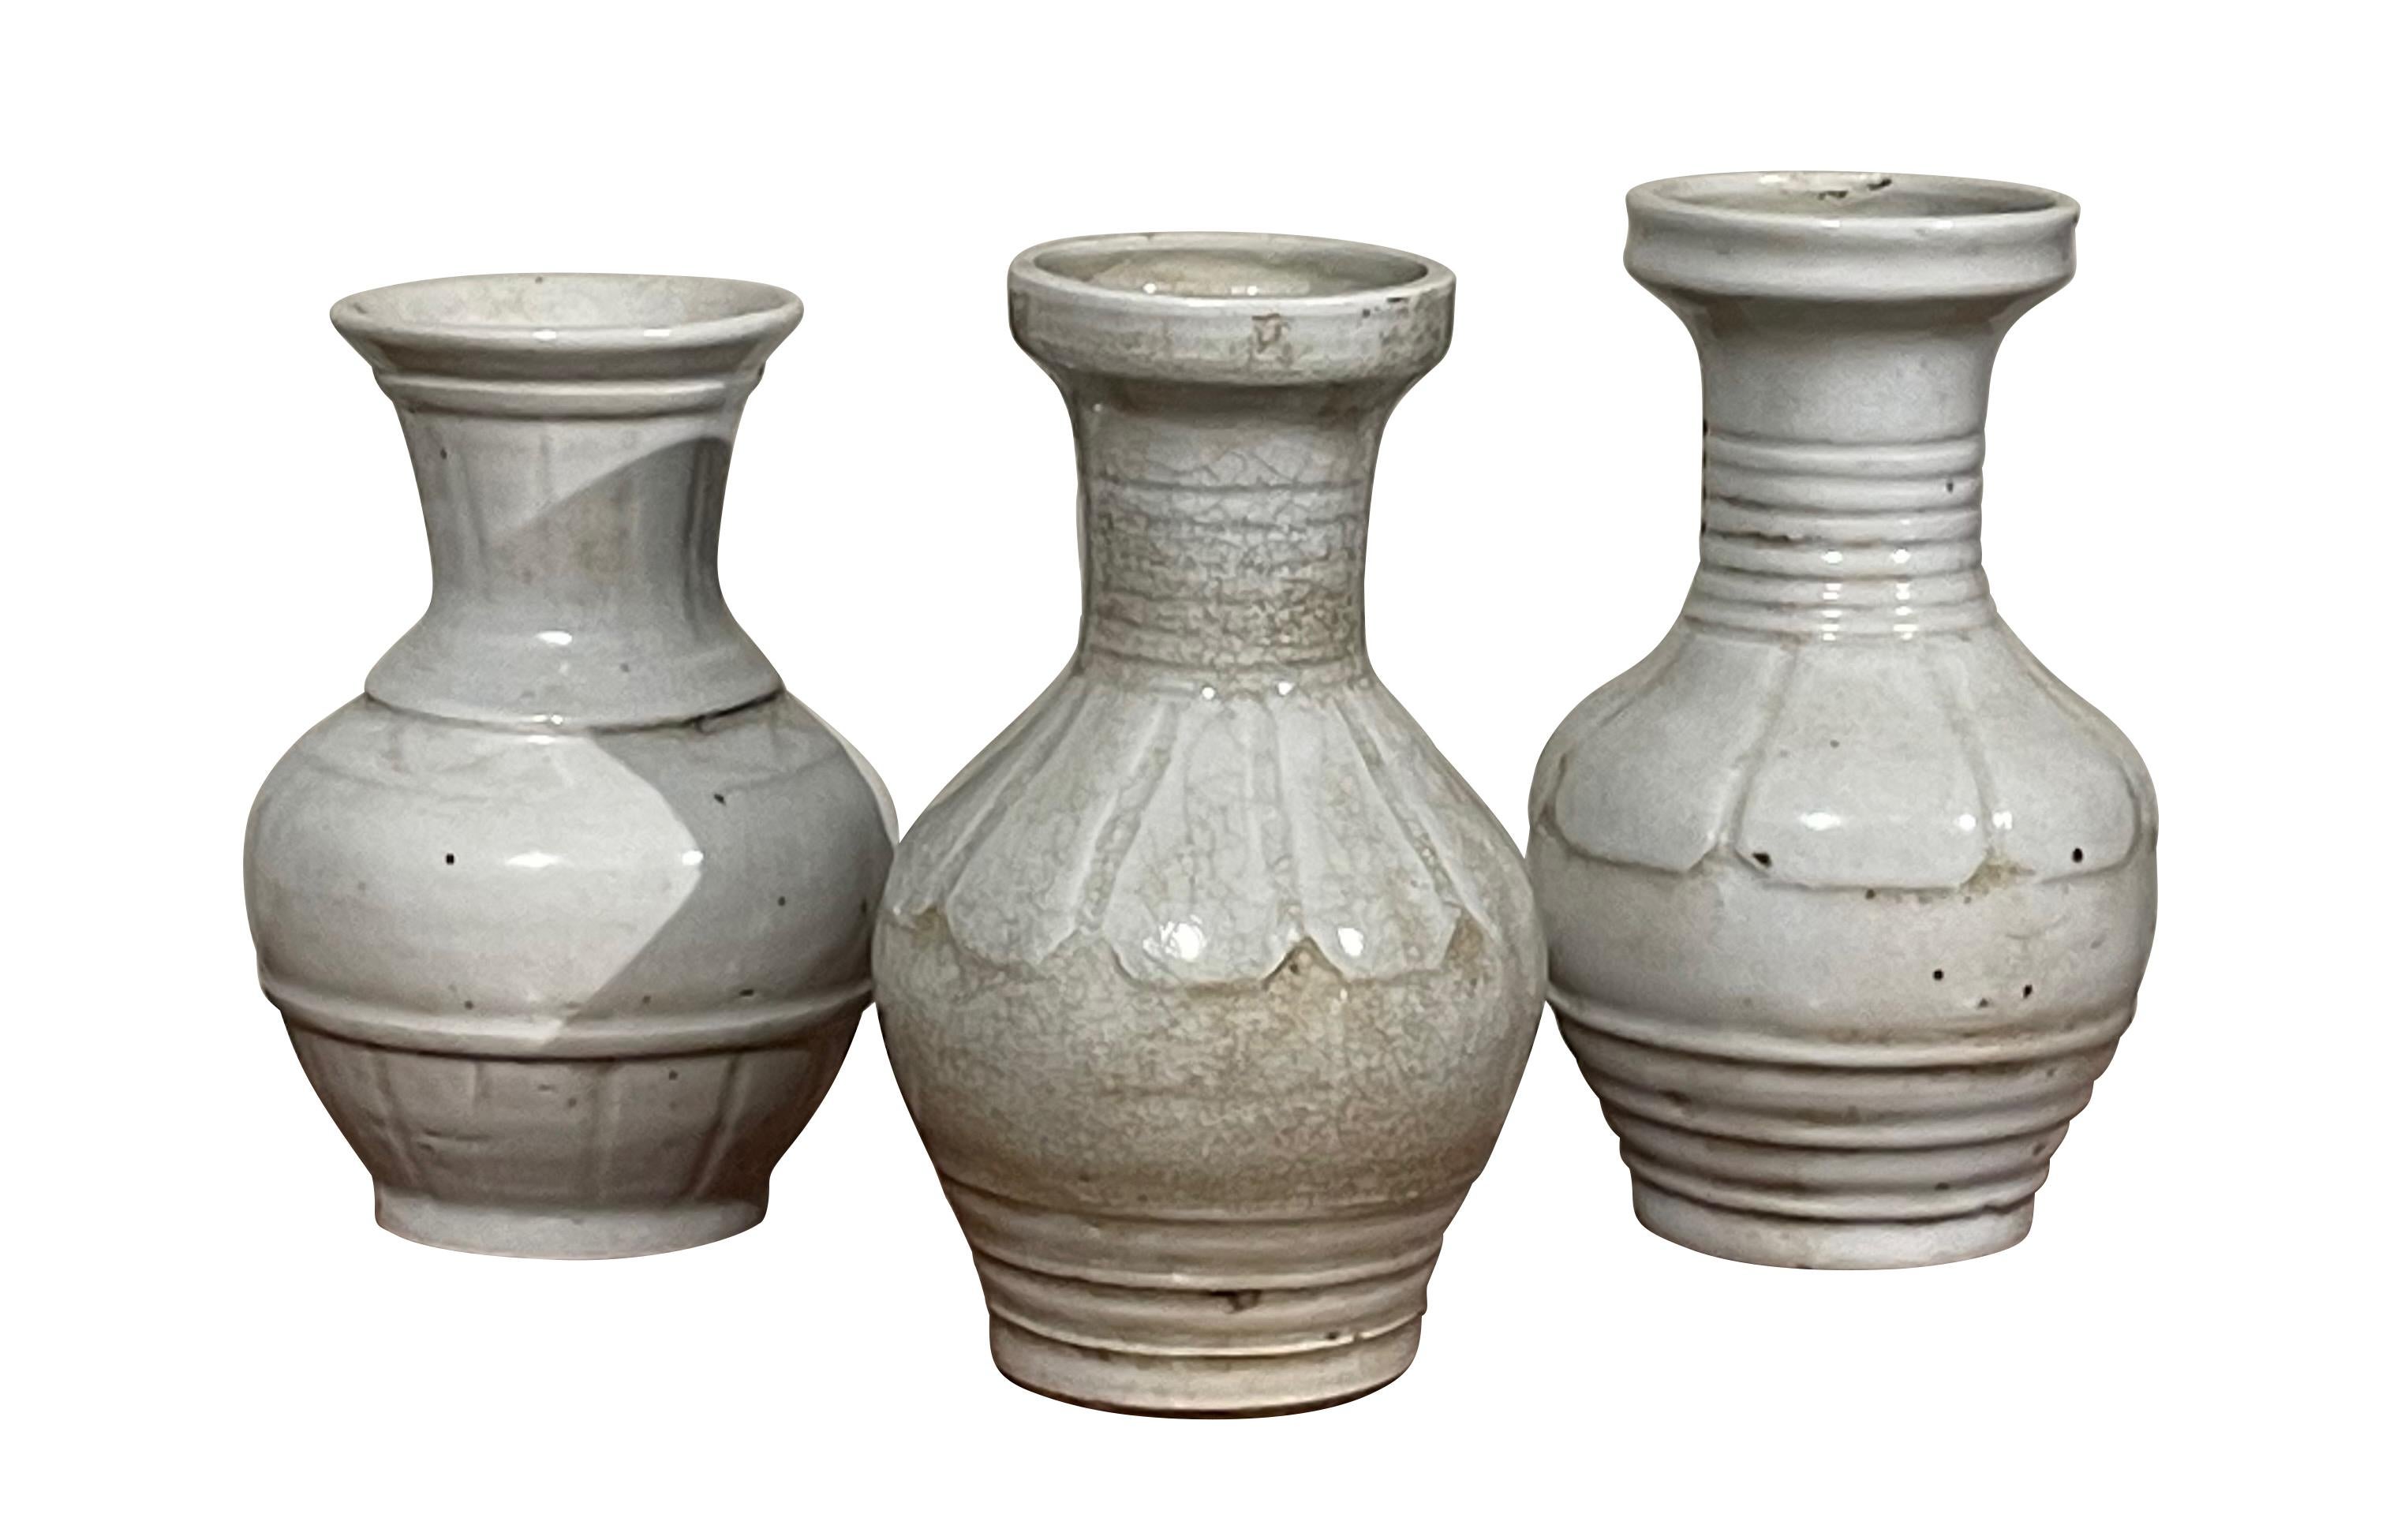 White Decorative Horizontal Bands Patterned Vase, China, Contemporary 1